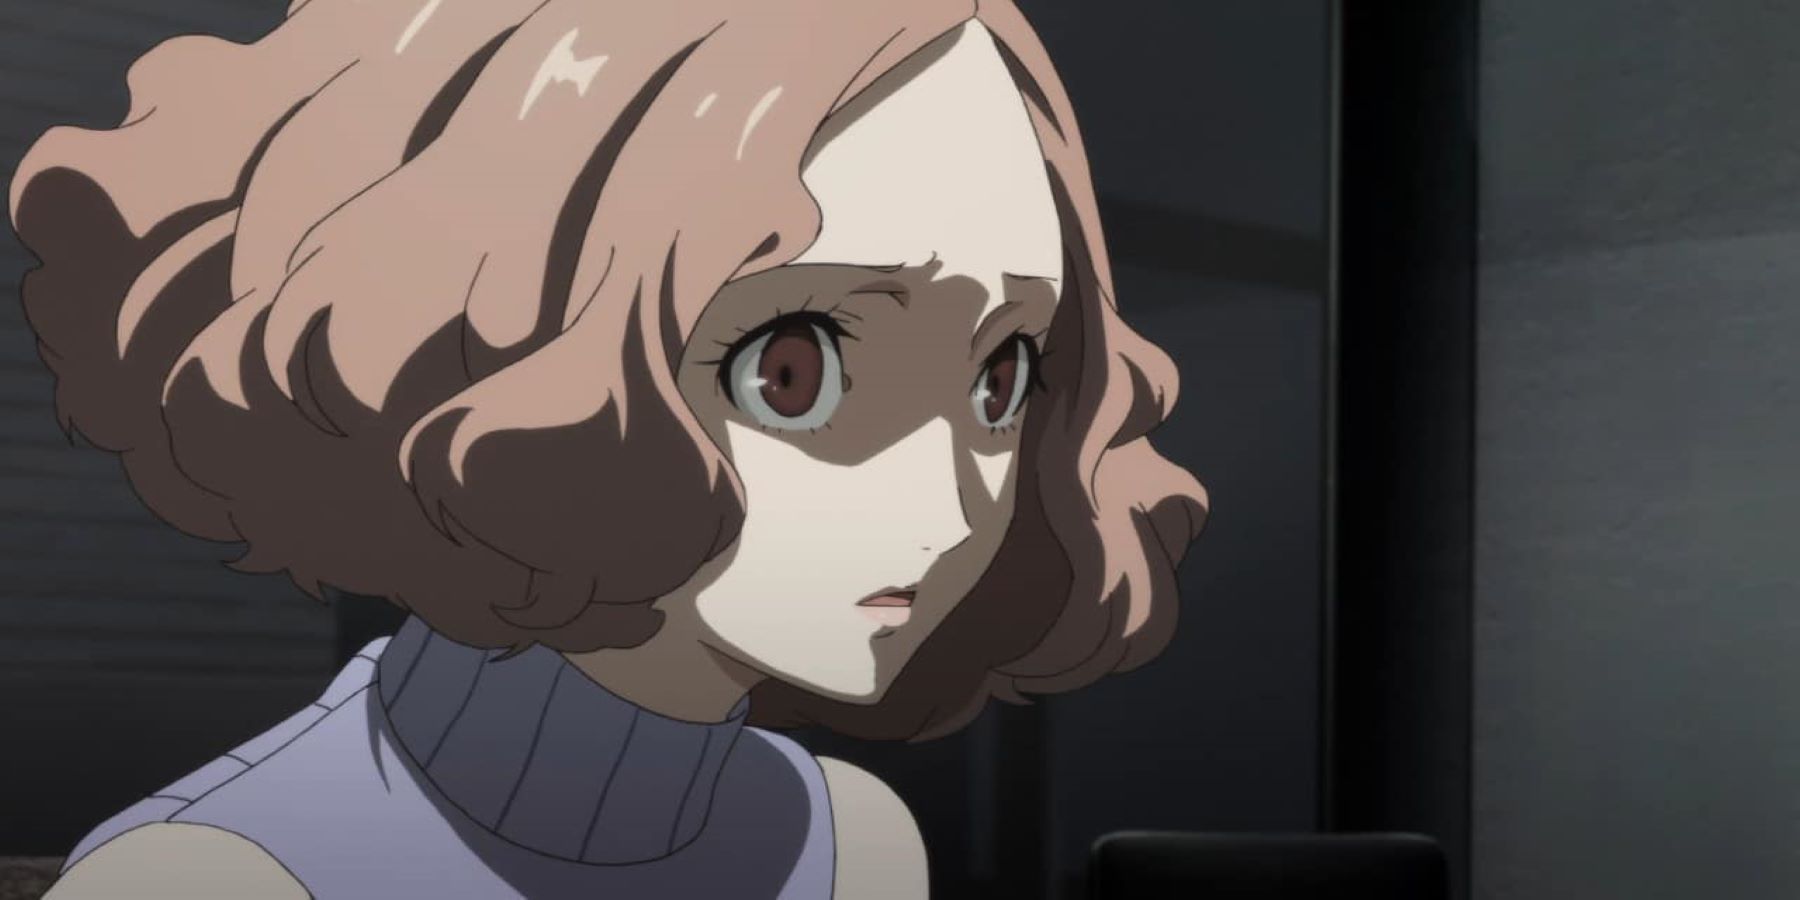 Haru Okumura looking distressed in the Persona 5 anime